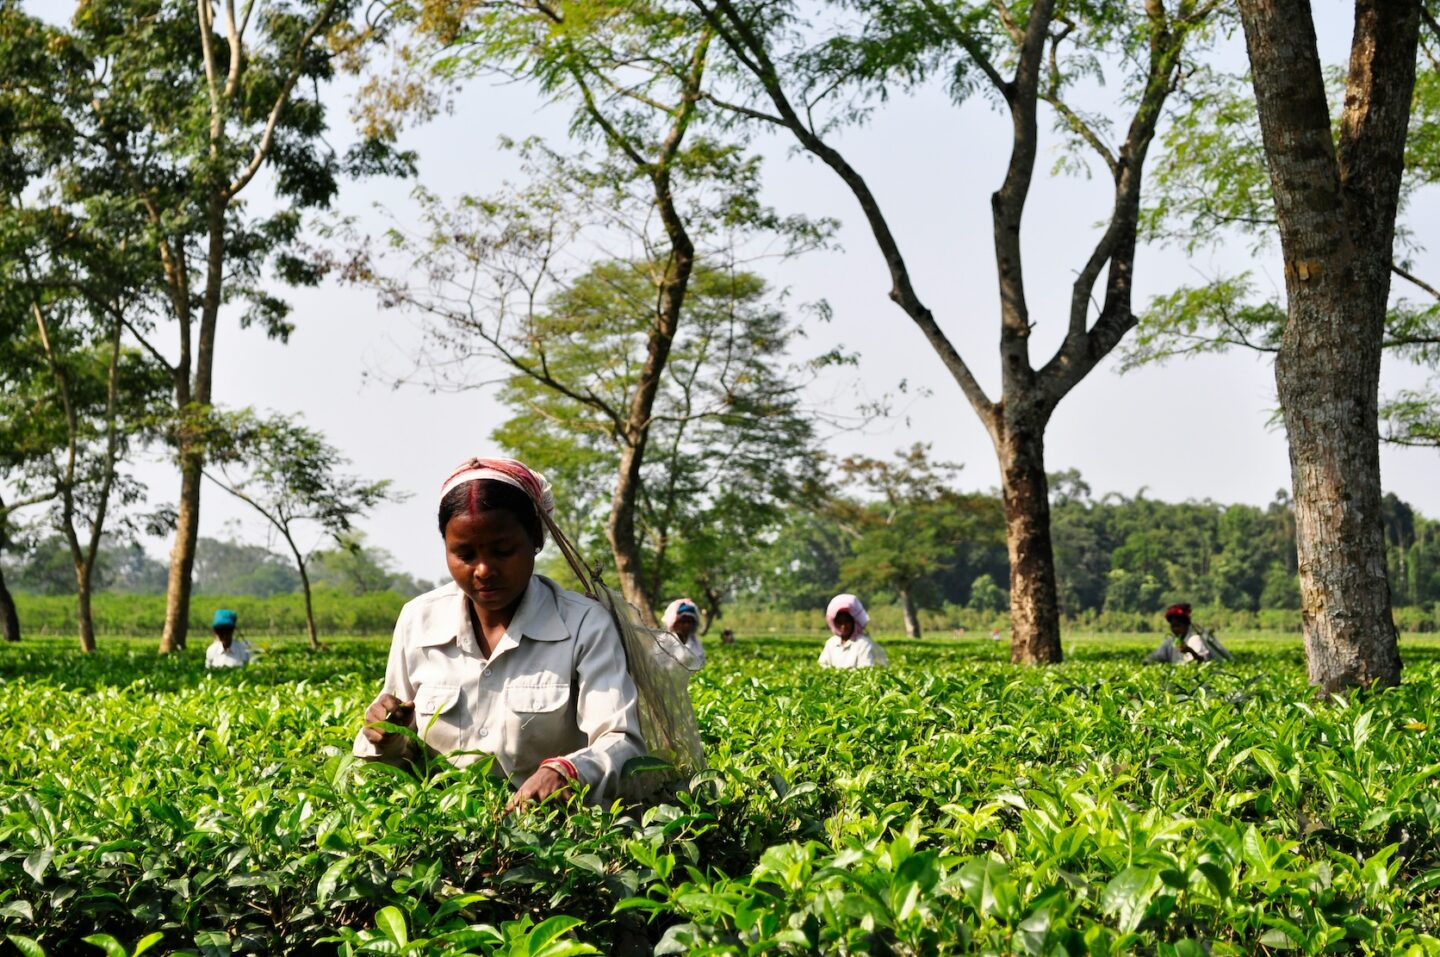 Women farmers plucking tea shoots in Assam North East, India (Photo Credit Amit Ranjan, Unsplash)